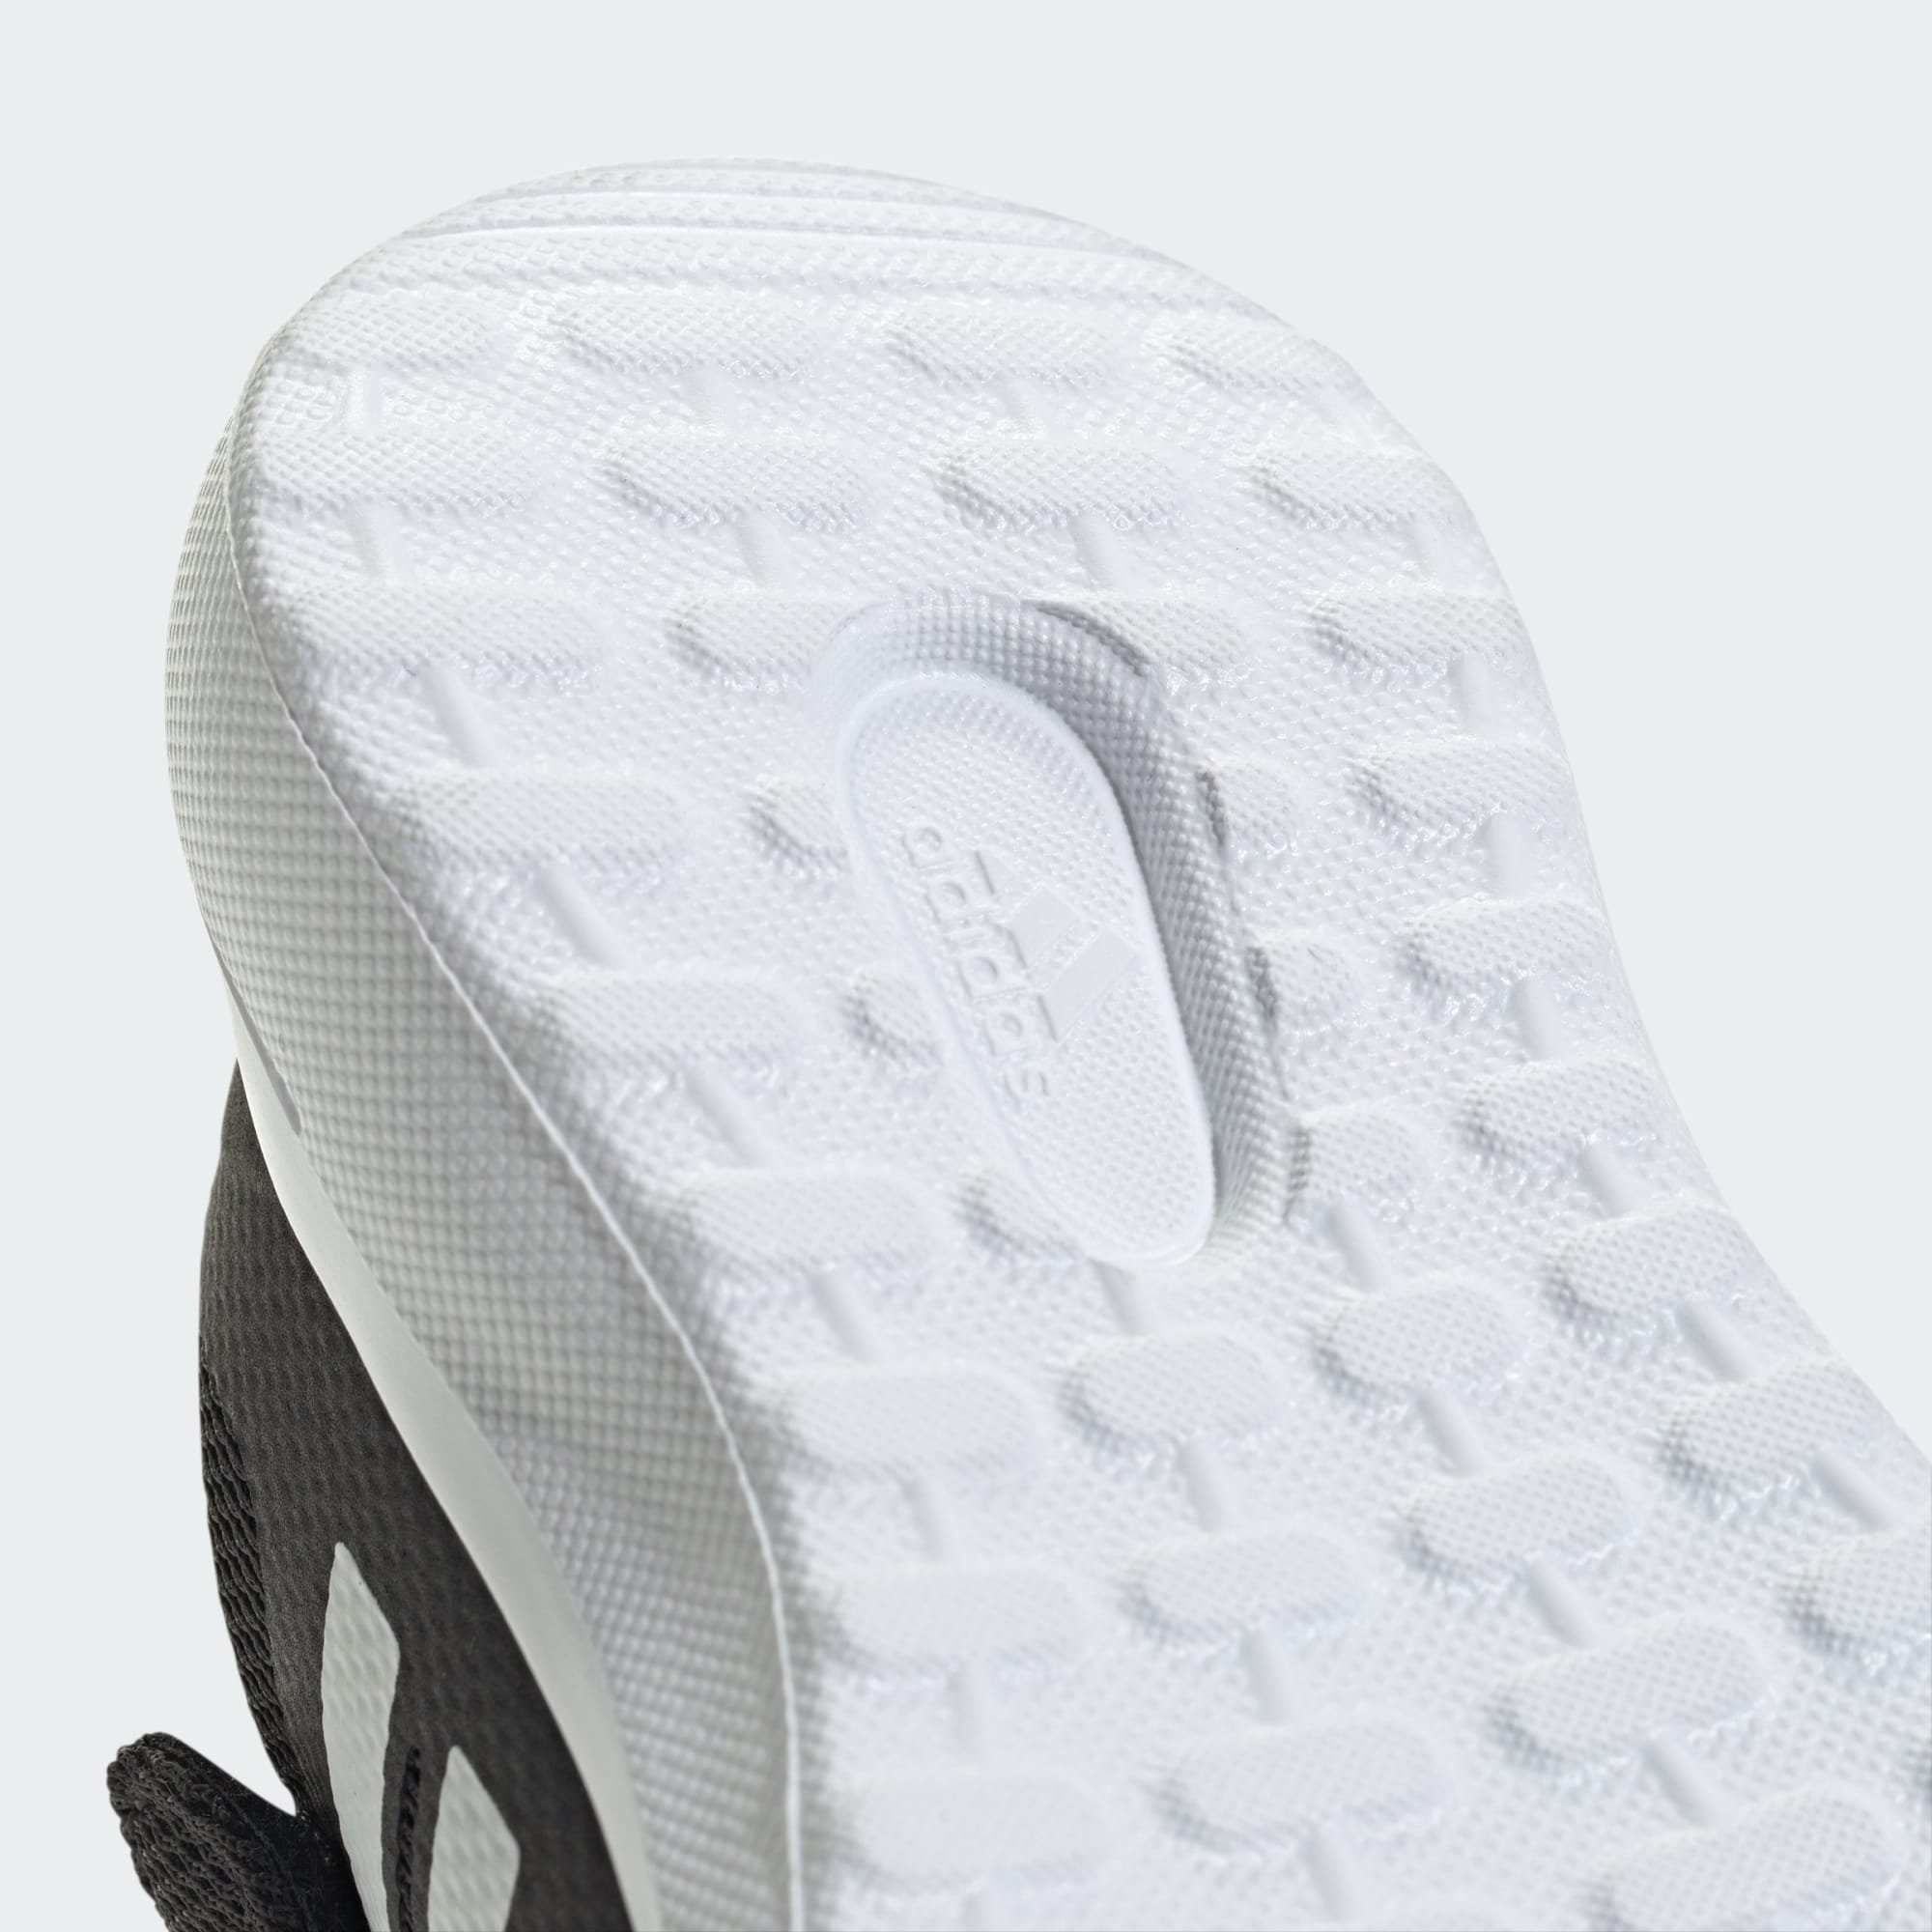 adidas Sportswear Black White / FORTARUN Core KIDS Core SCHUH / 2.0 Black Cloud Sneaker